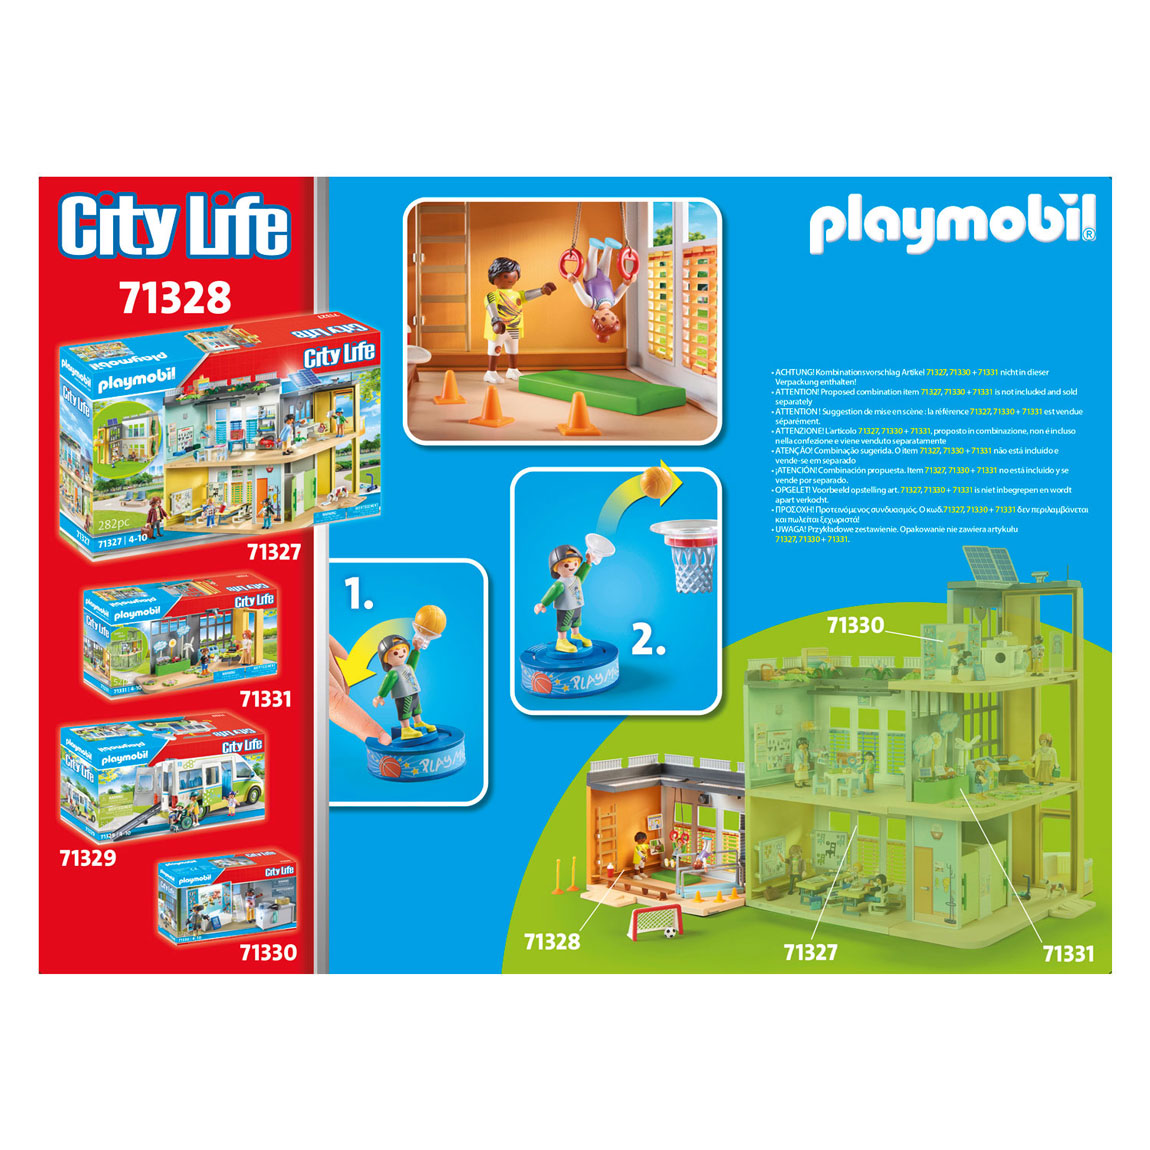 Playmobil City Life Erweiterungs-Fitnessstudio – 71328